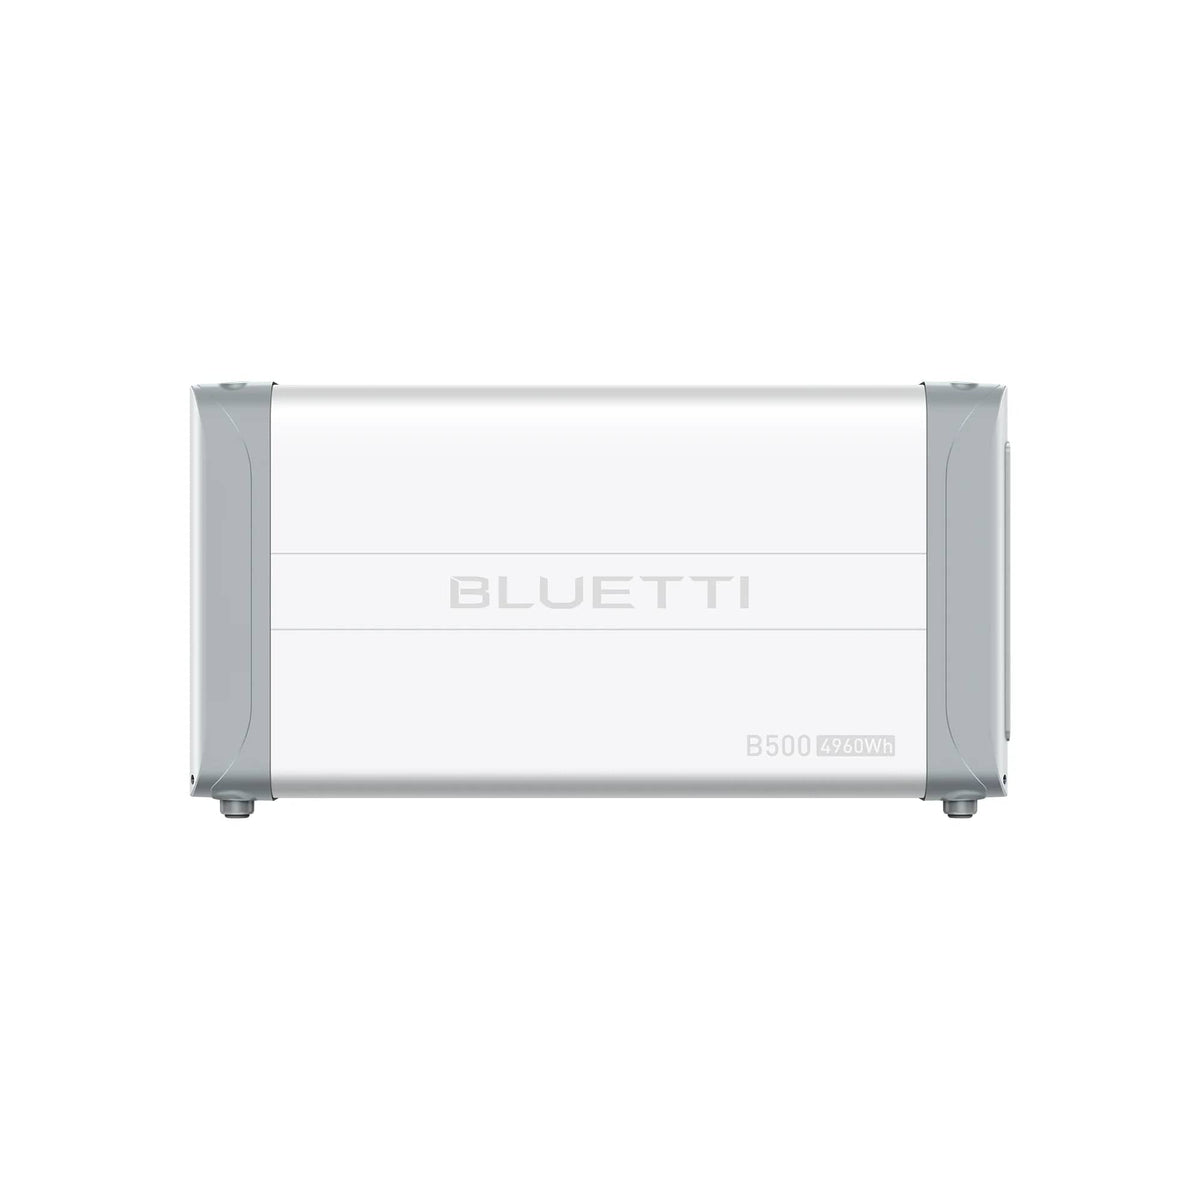 Bluetti Power Station Bluetti EP900 + B500 Home Battery Backup